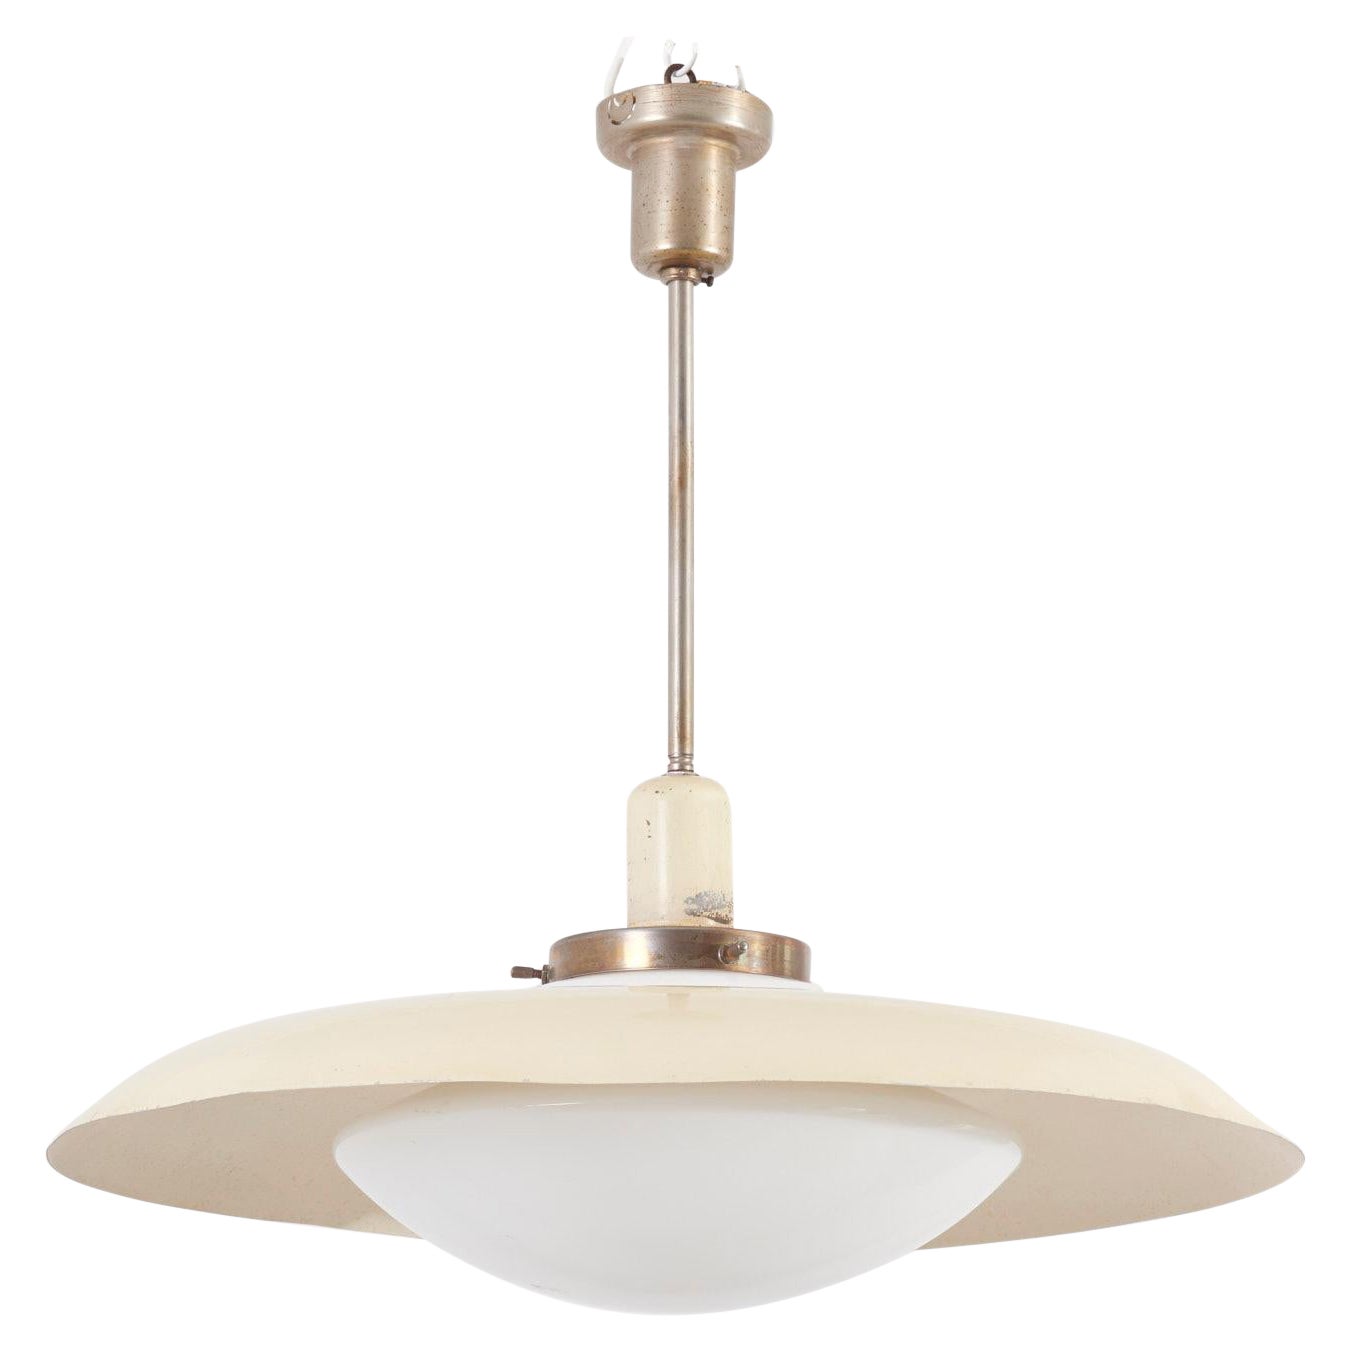 1930s Bauhaus Style Pendant Lamp